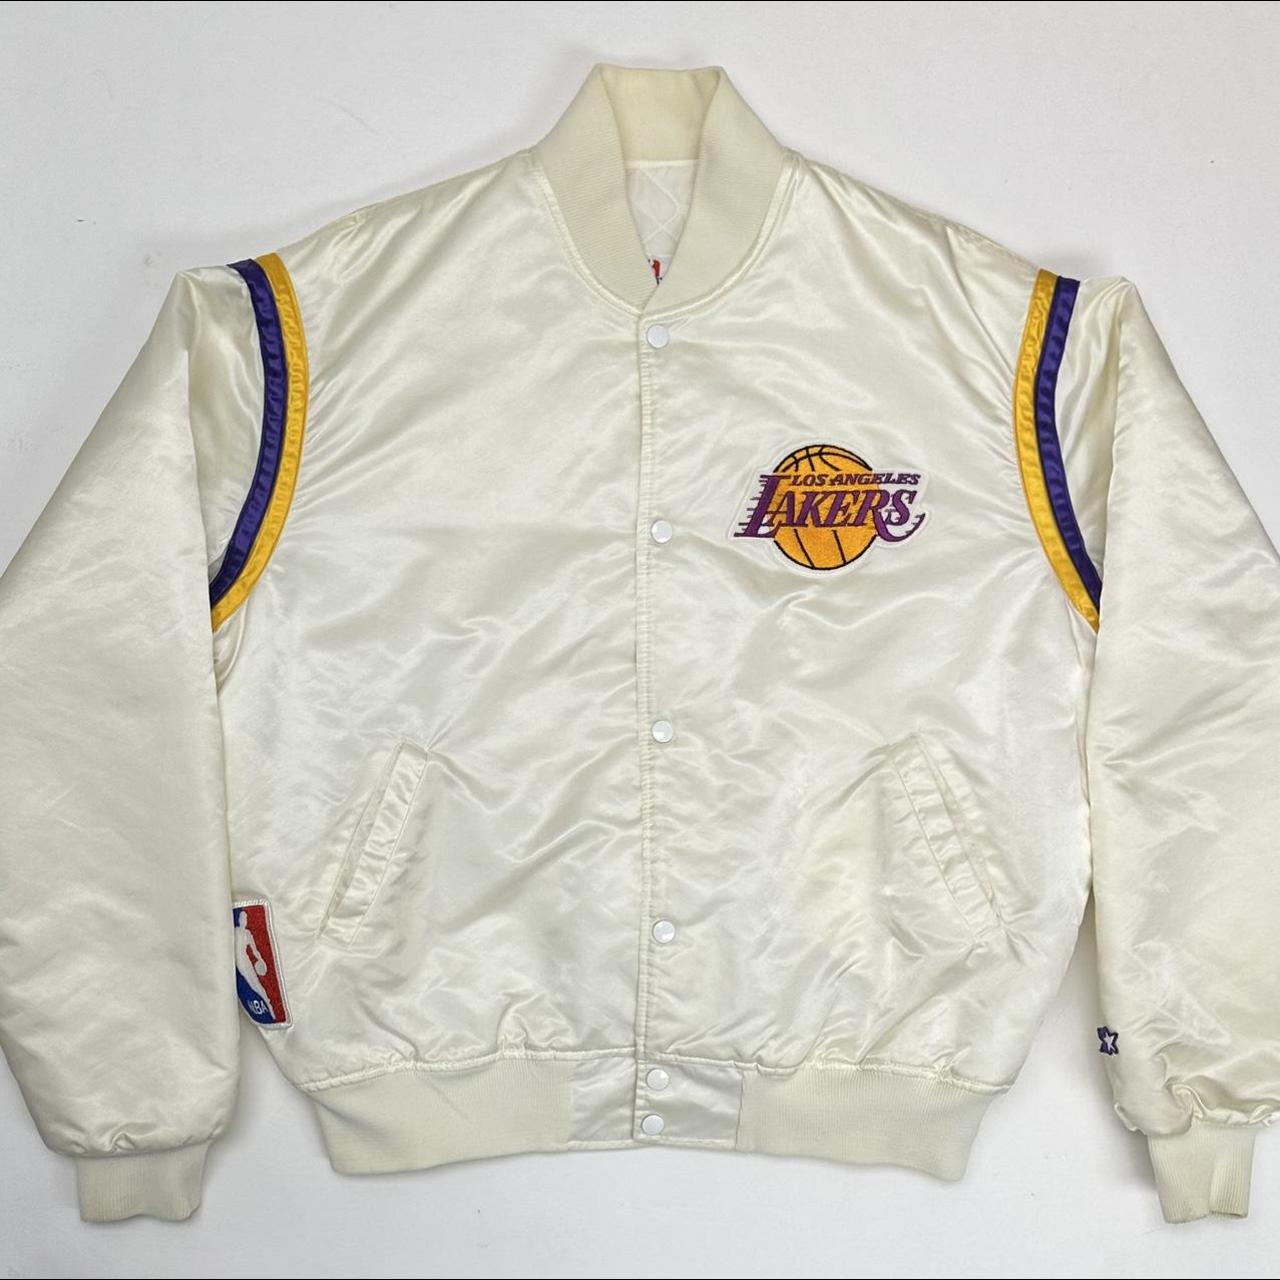 Vintage Los Angeles Lakers NBA satin bomber jacket. Tagged as a medium.